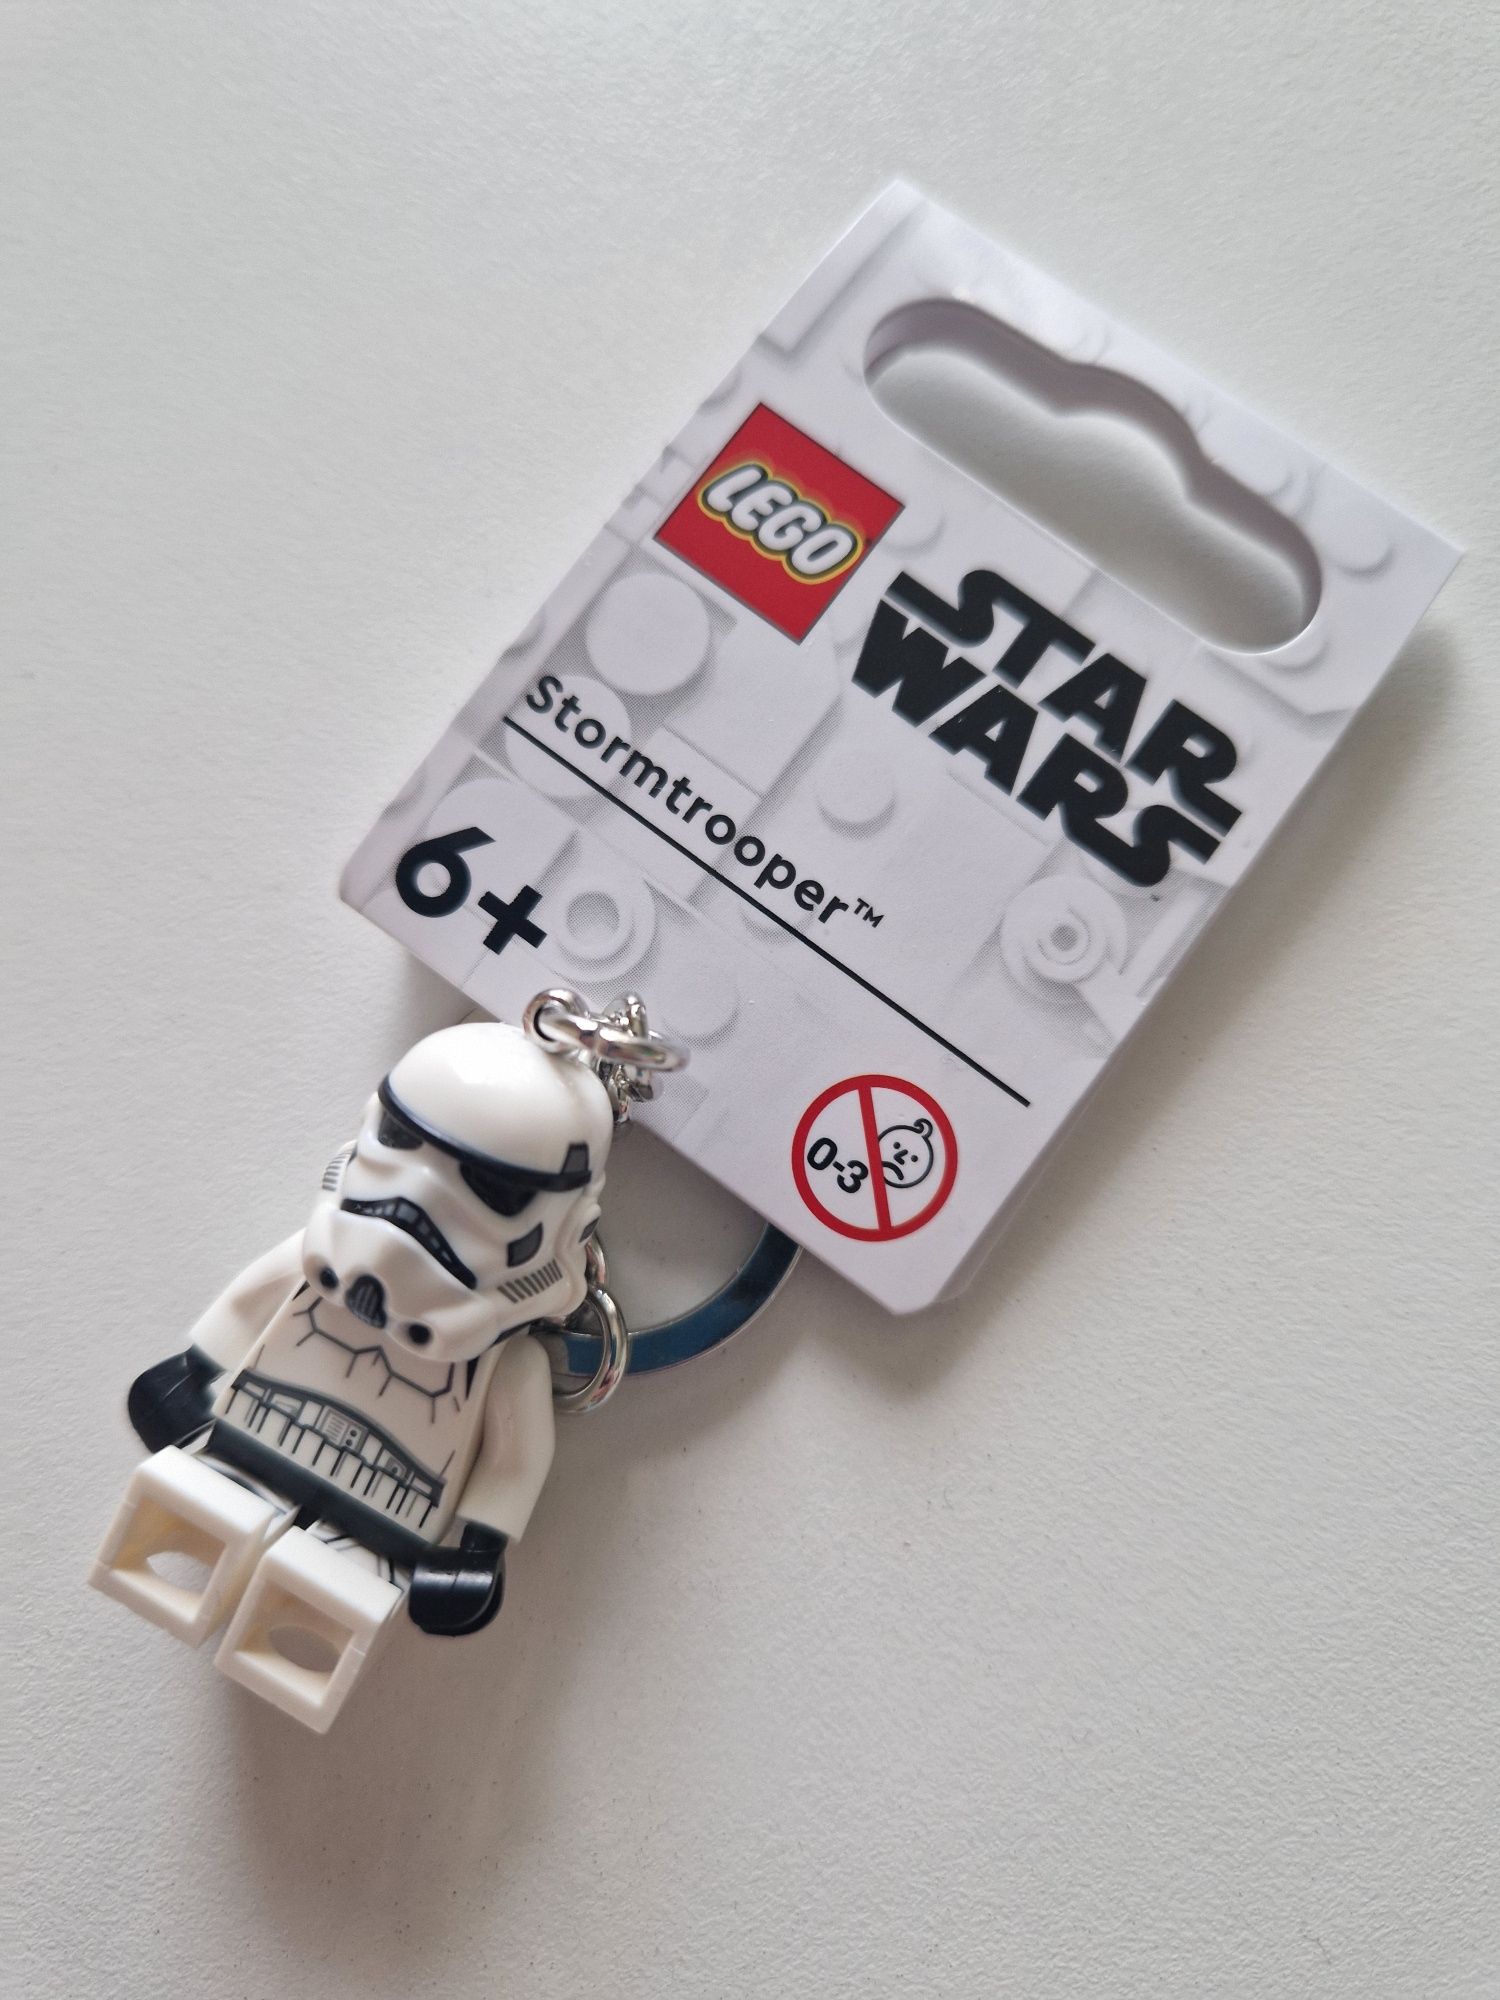 Lego Star Wars брелок штурмовик